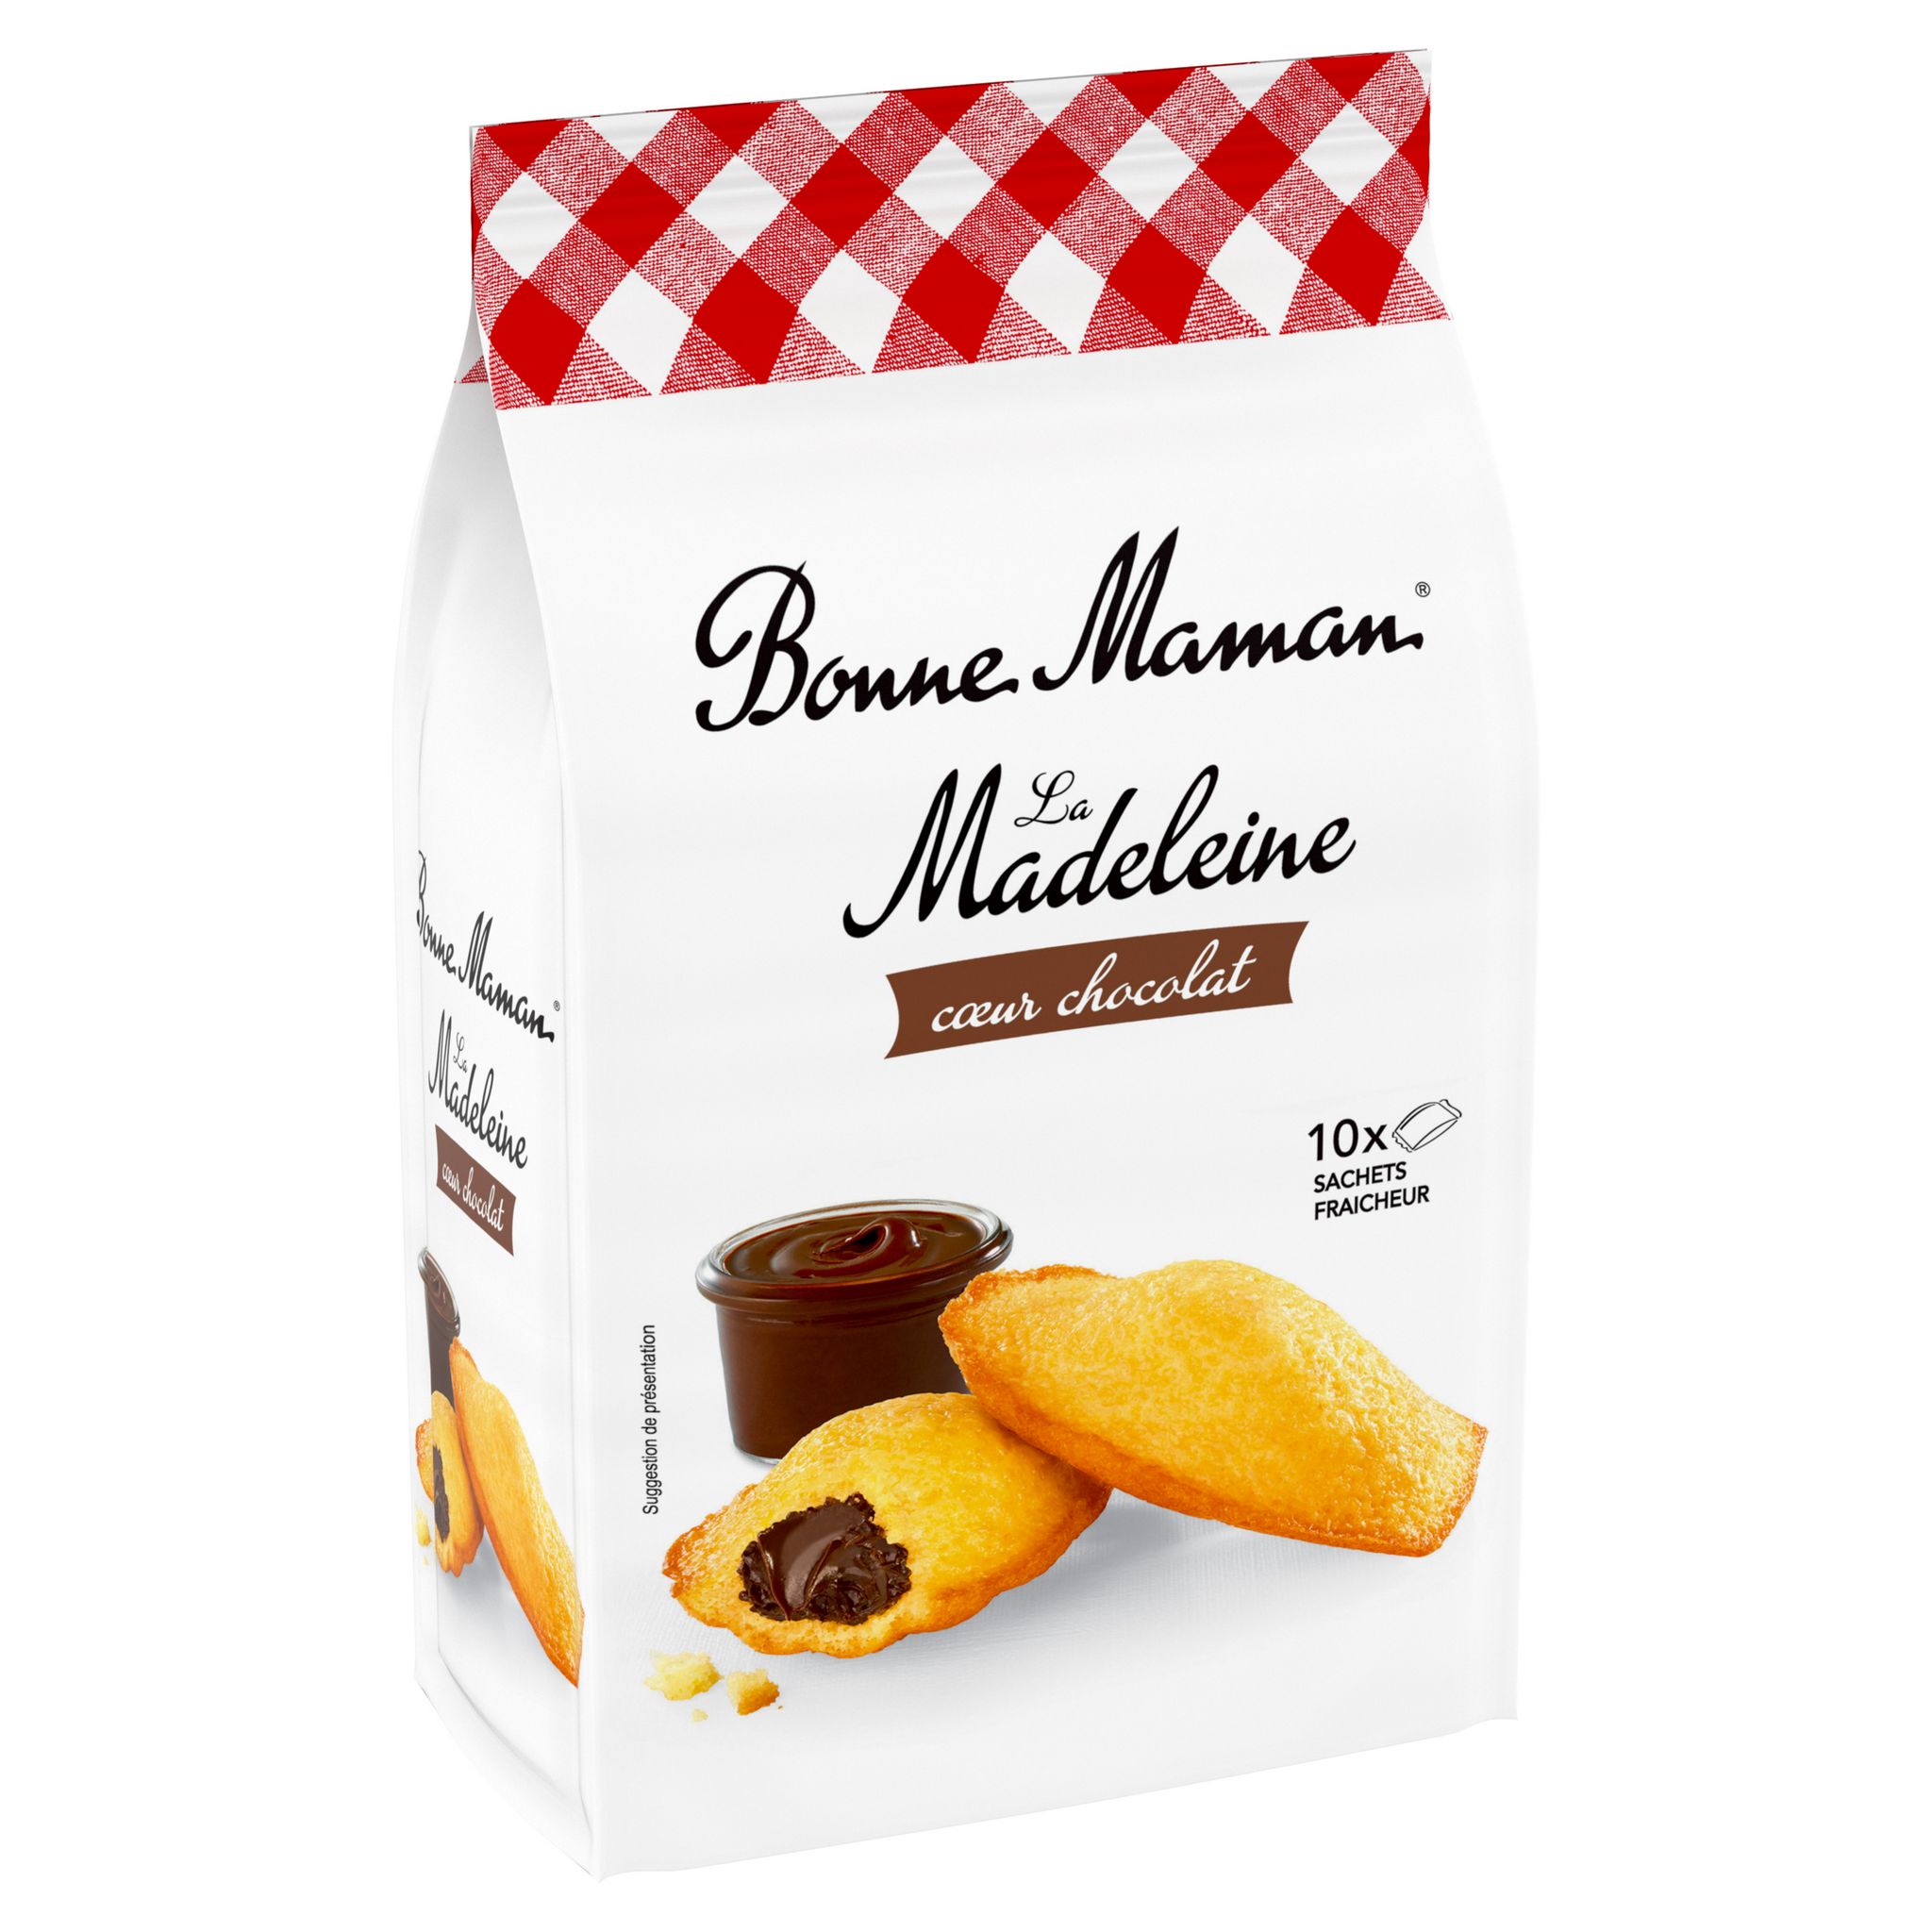 BONNE MAMAN Madeleine au chocolat au lait sachets individuels 10 madeleines  350g pas cher 